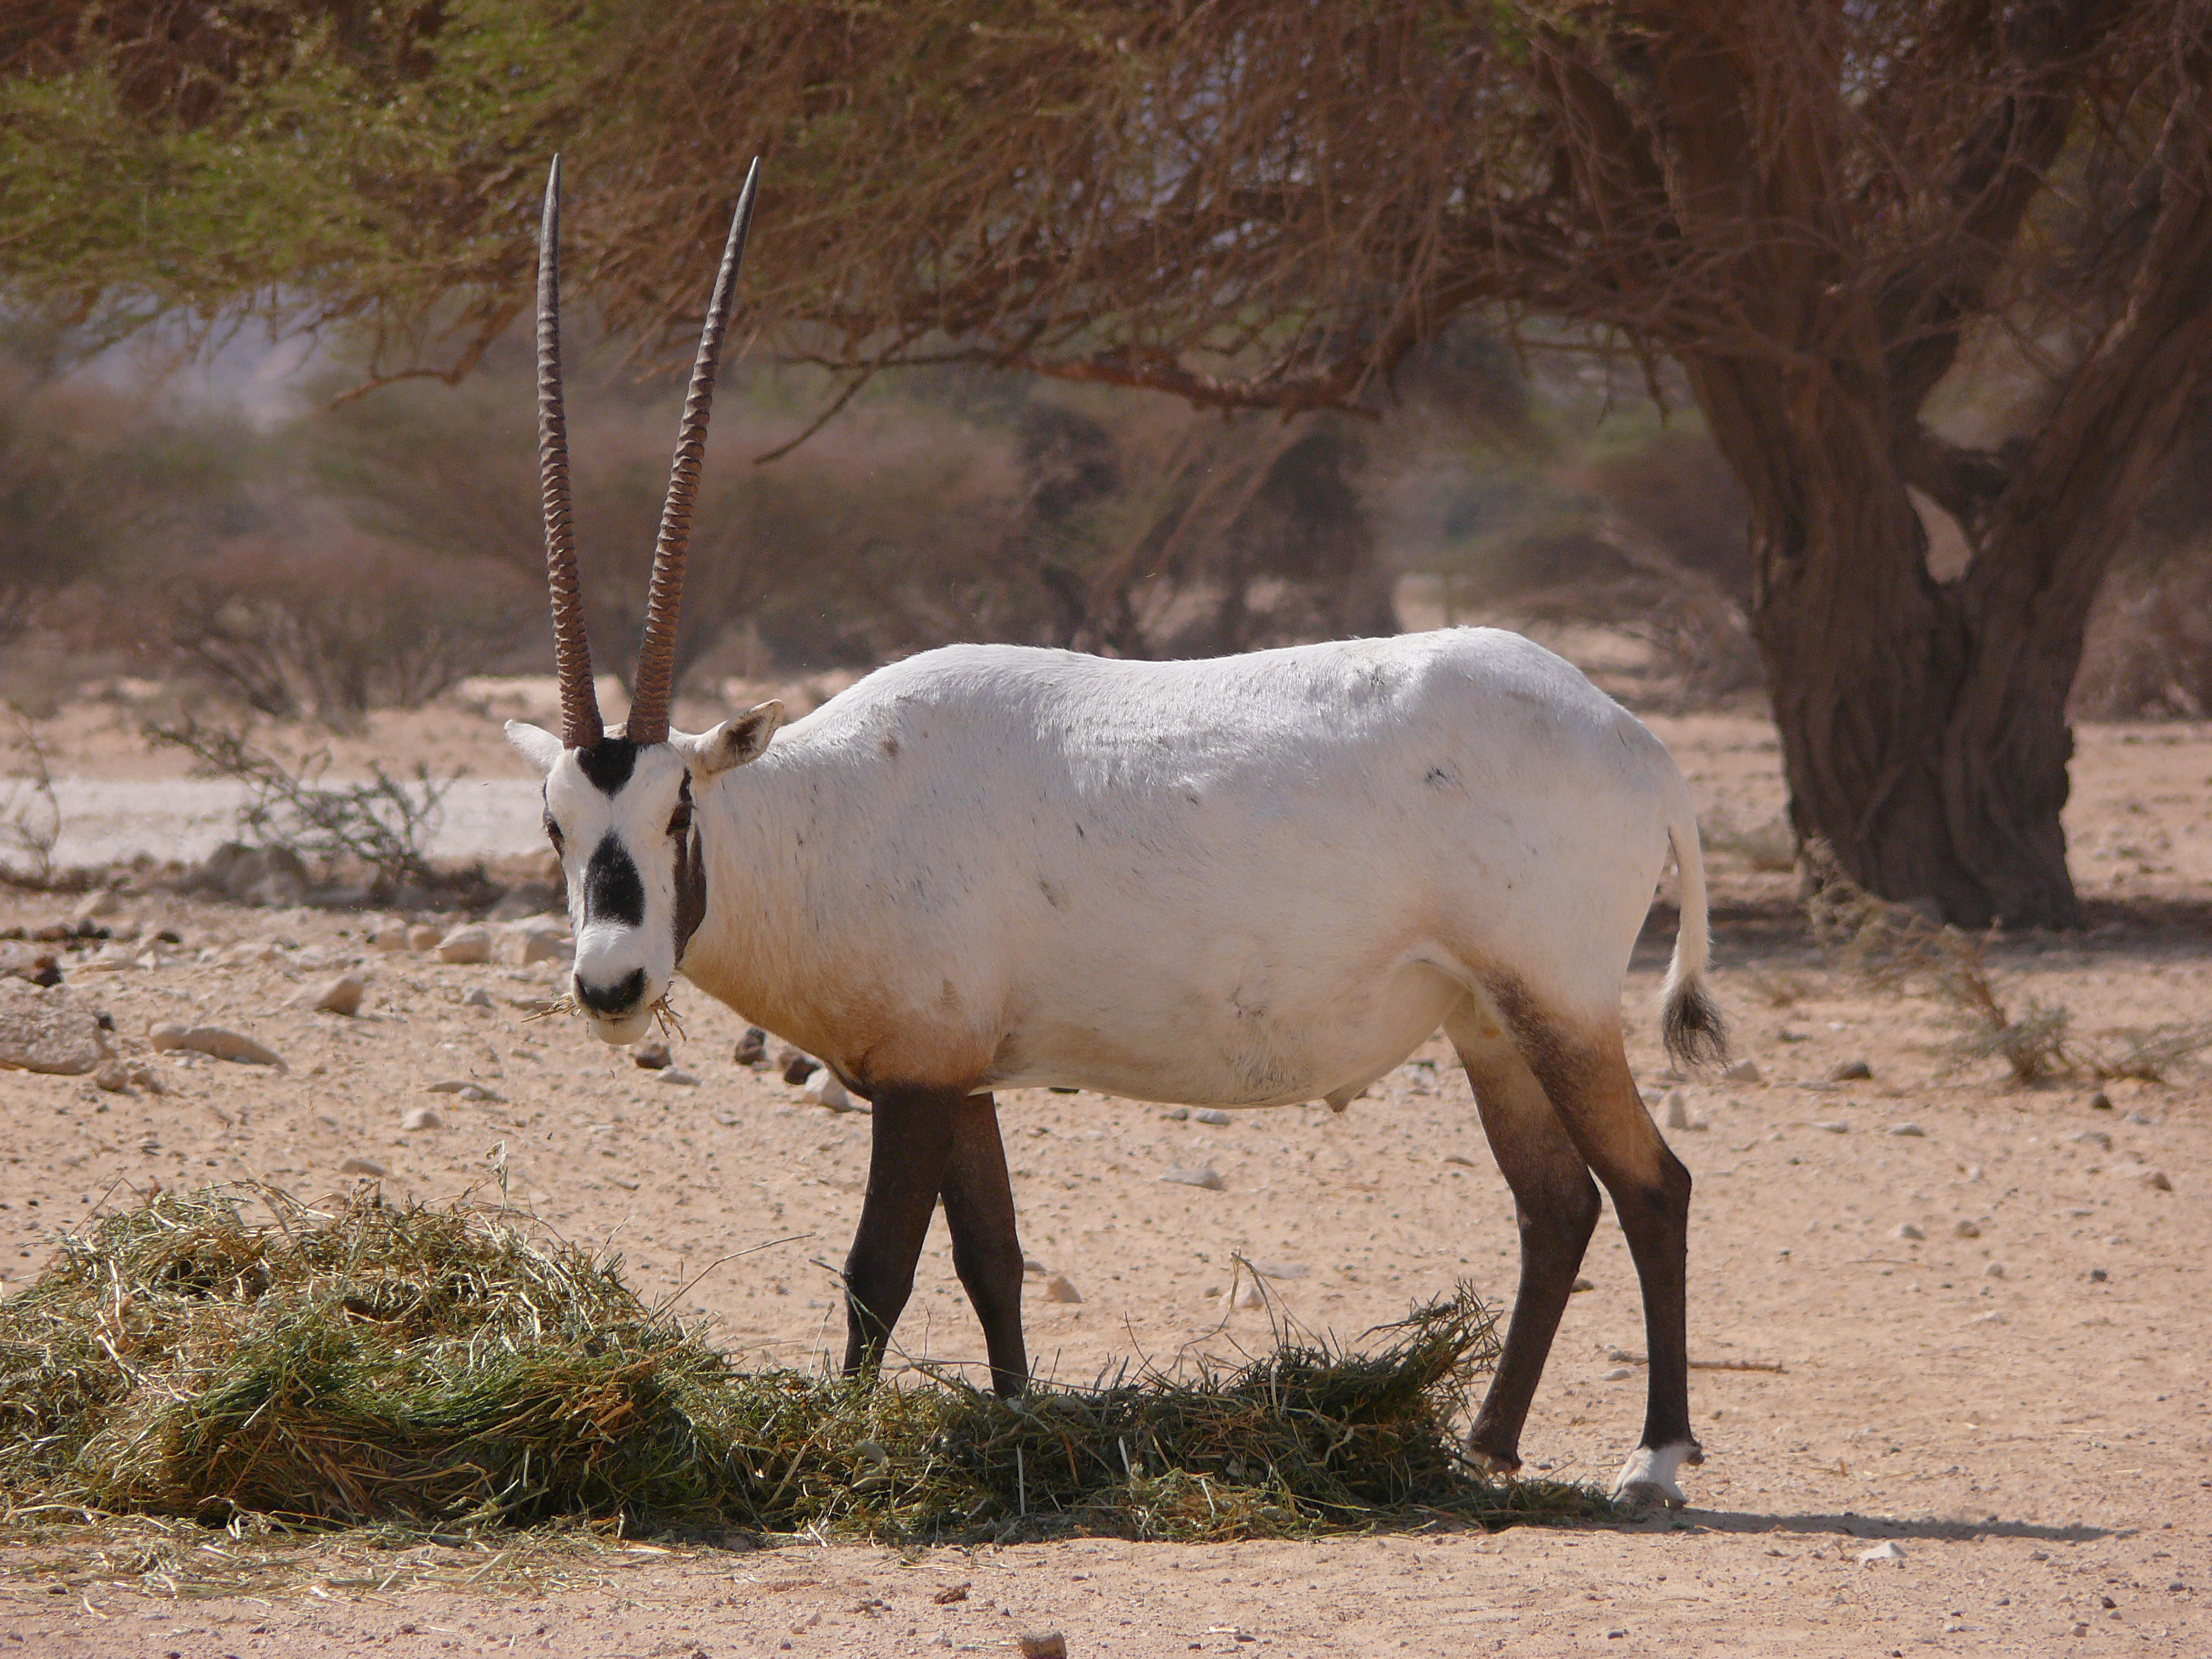 Arabian oryx reintroduction - Wikipedia